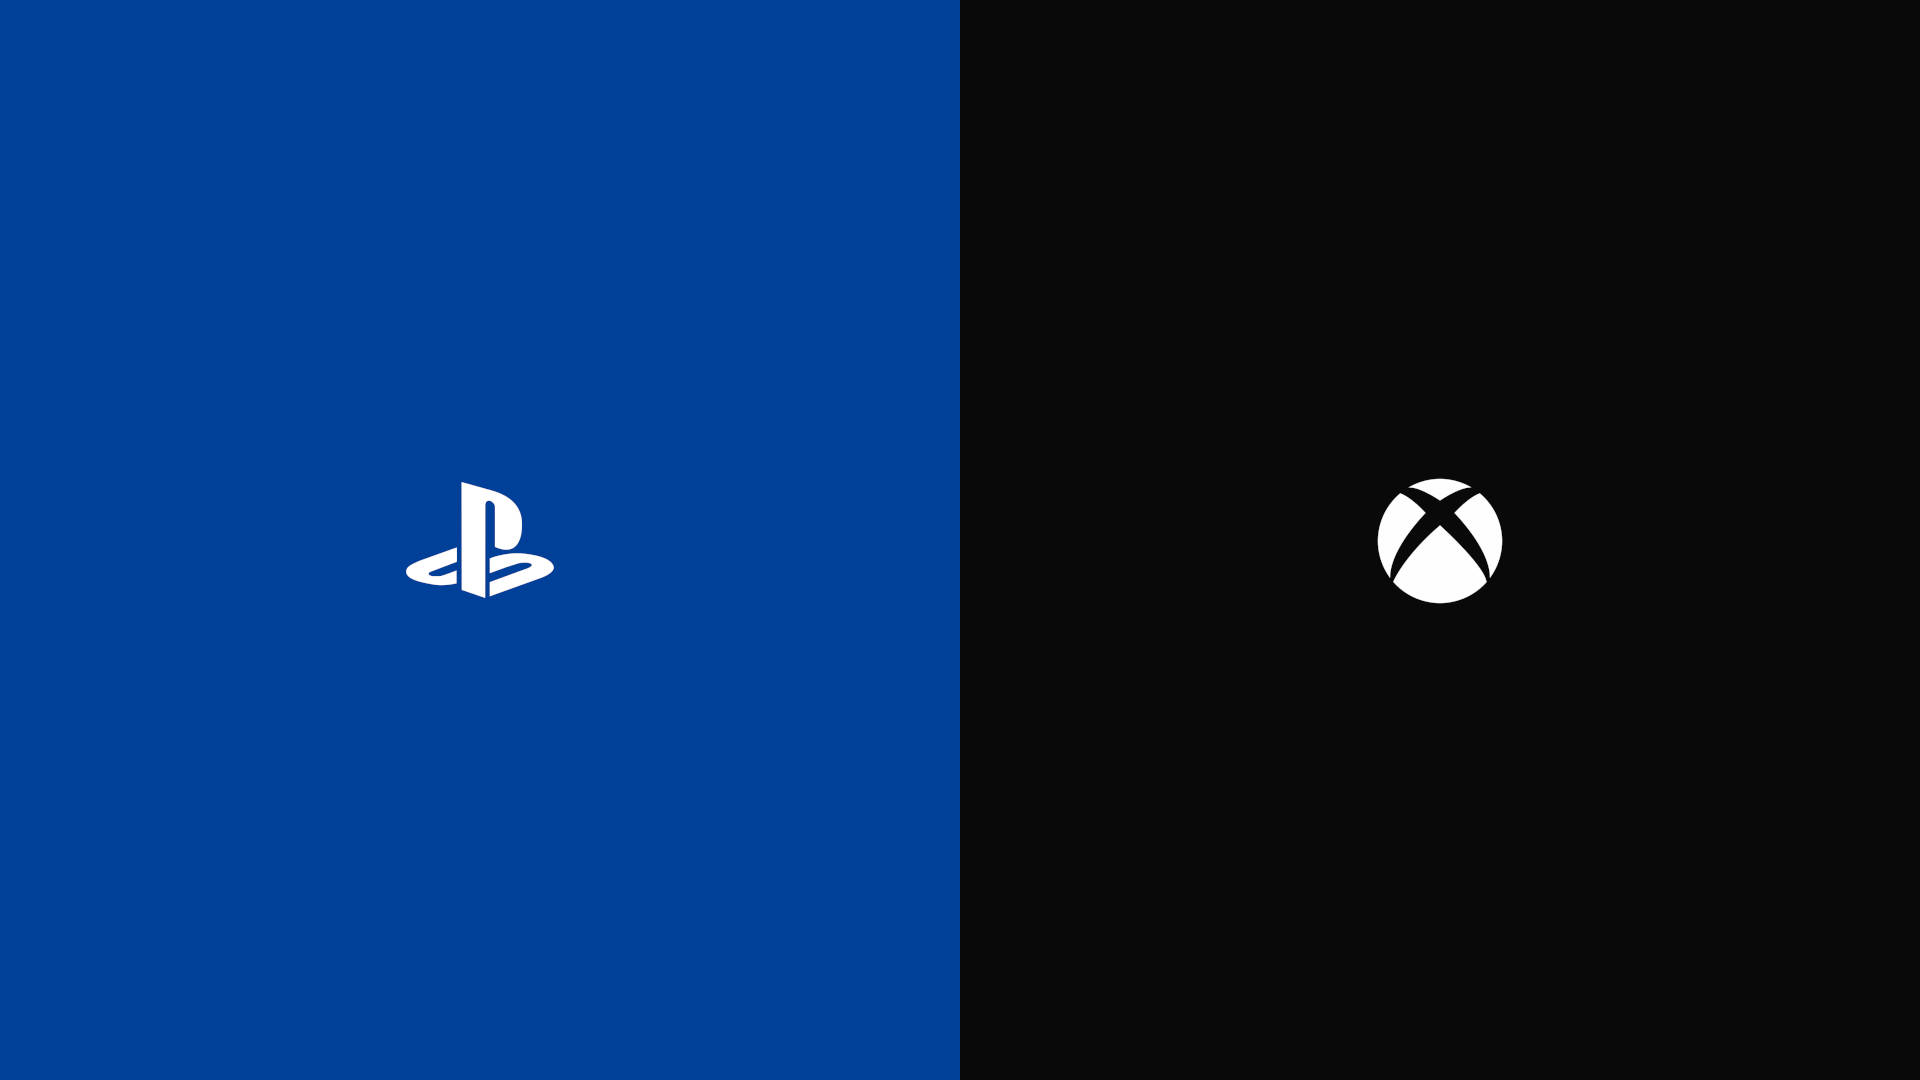 Ps4 Logo And Xbox Icon Wallpaper